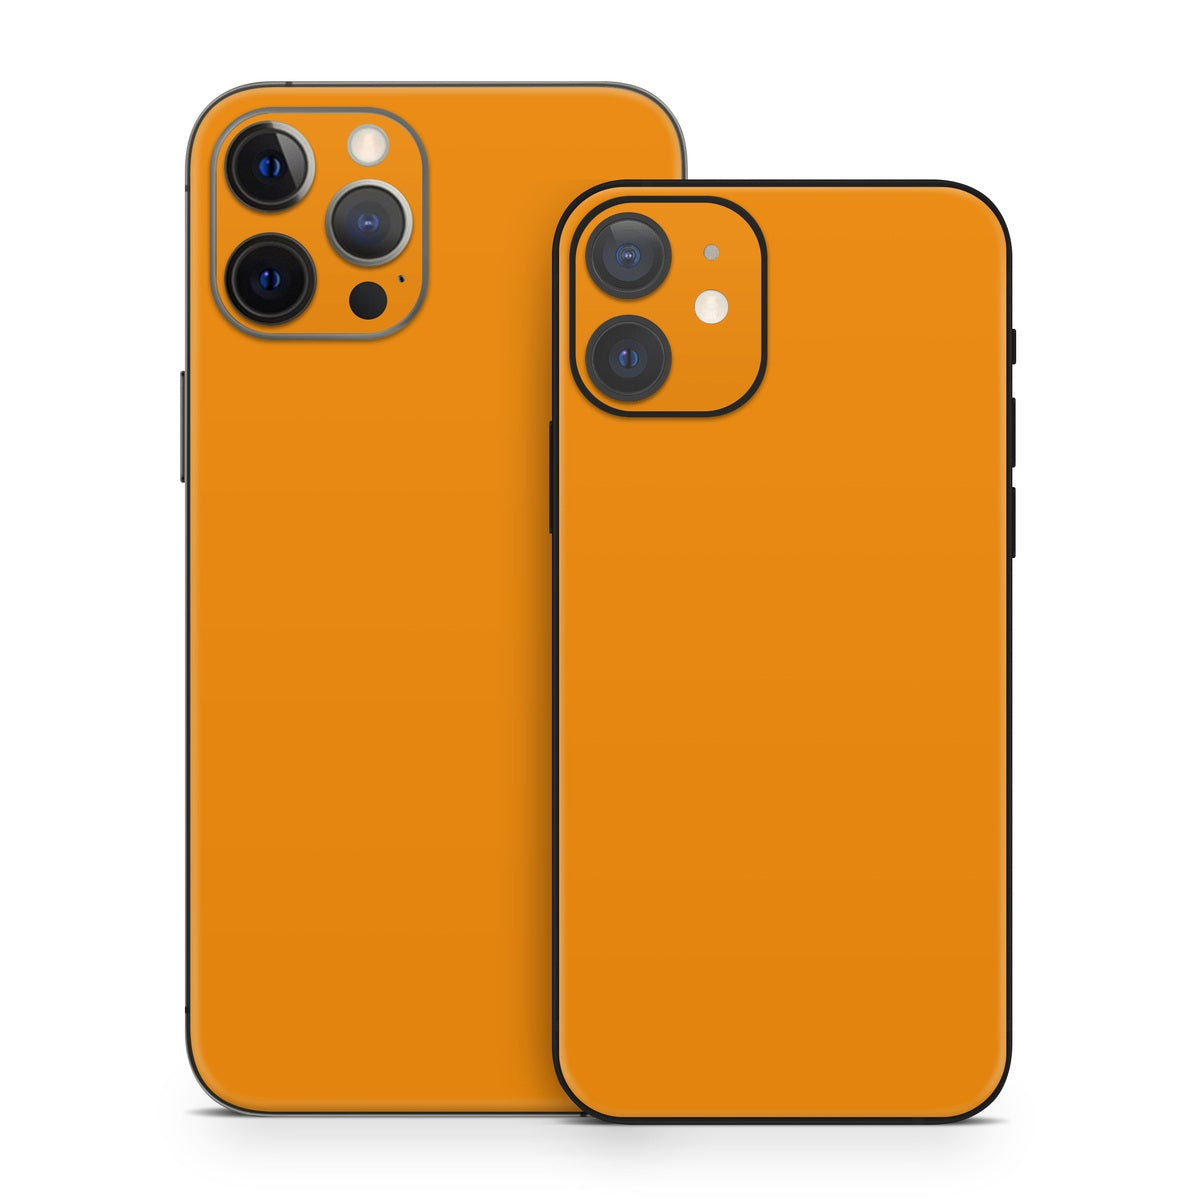 Solid State Orange - Apple iPhone 12 Skin